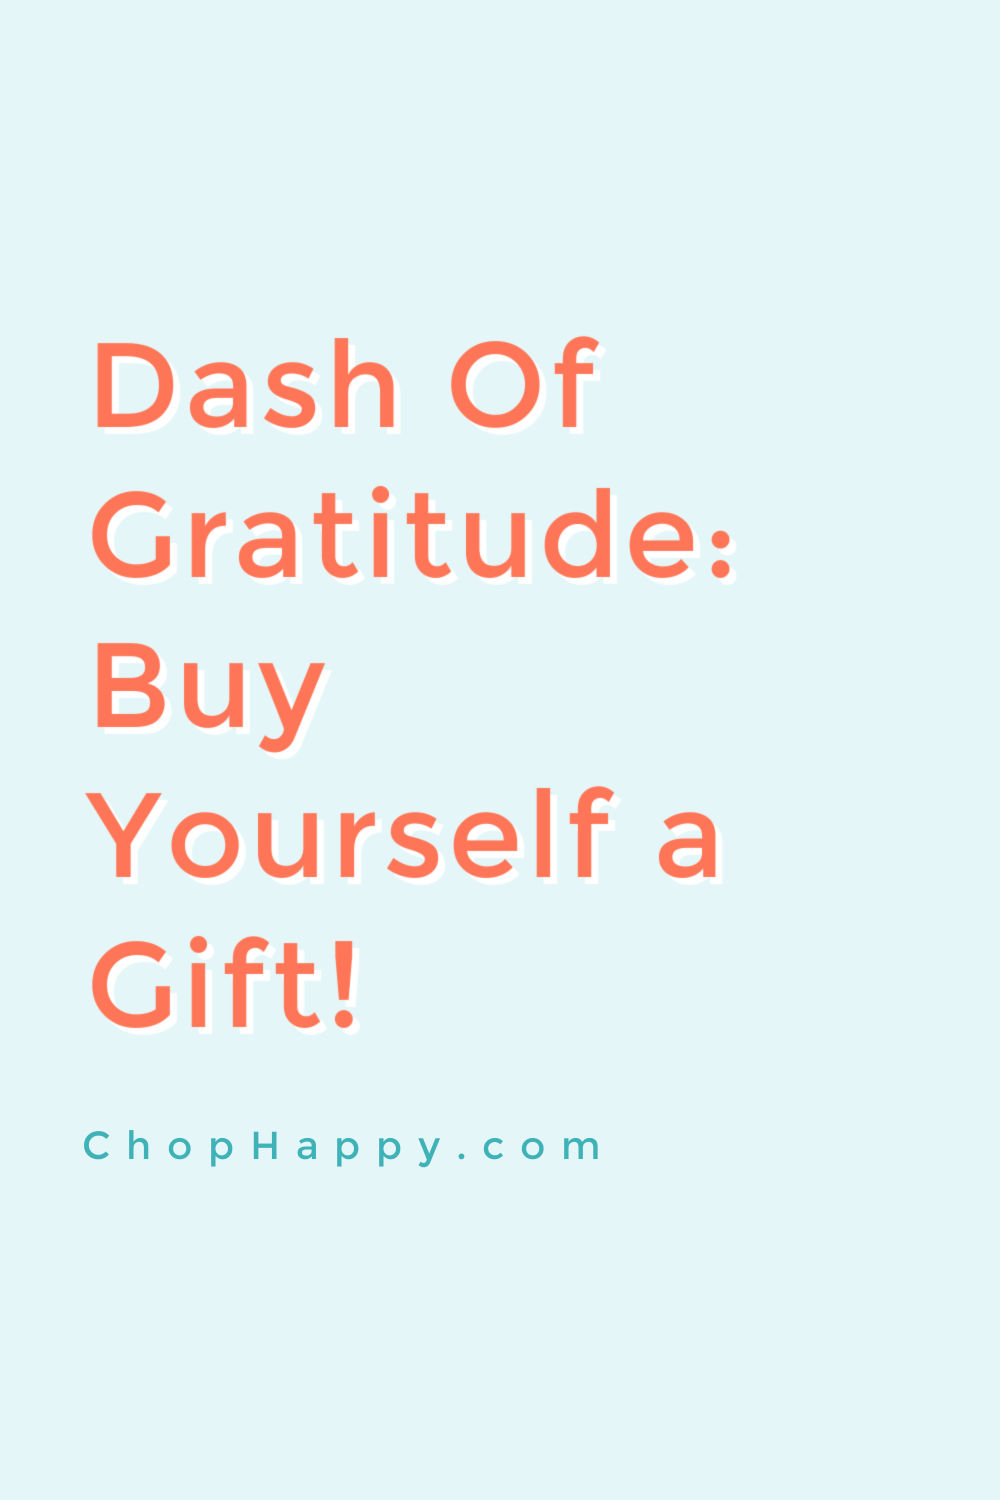 Dash of Gratitude: Buy Yourself a Gift.  Use your attitude of gratitude to help you! Buy yourself a gift to thank yourself and tell yourself you are great! www.ChopHappy.com #attitudeofgratitude #lawofattraction